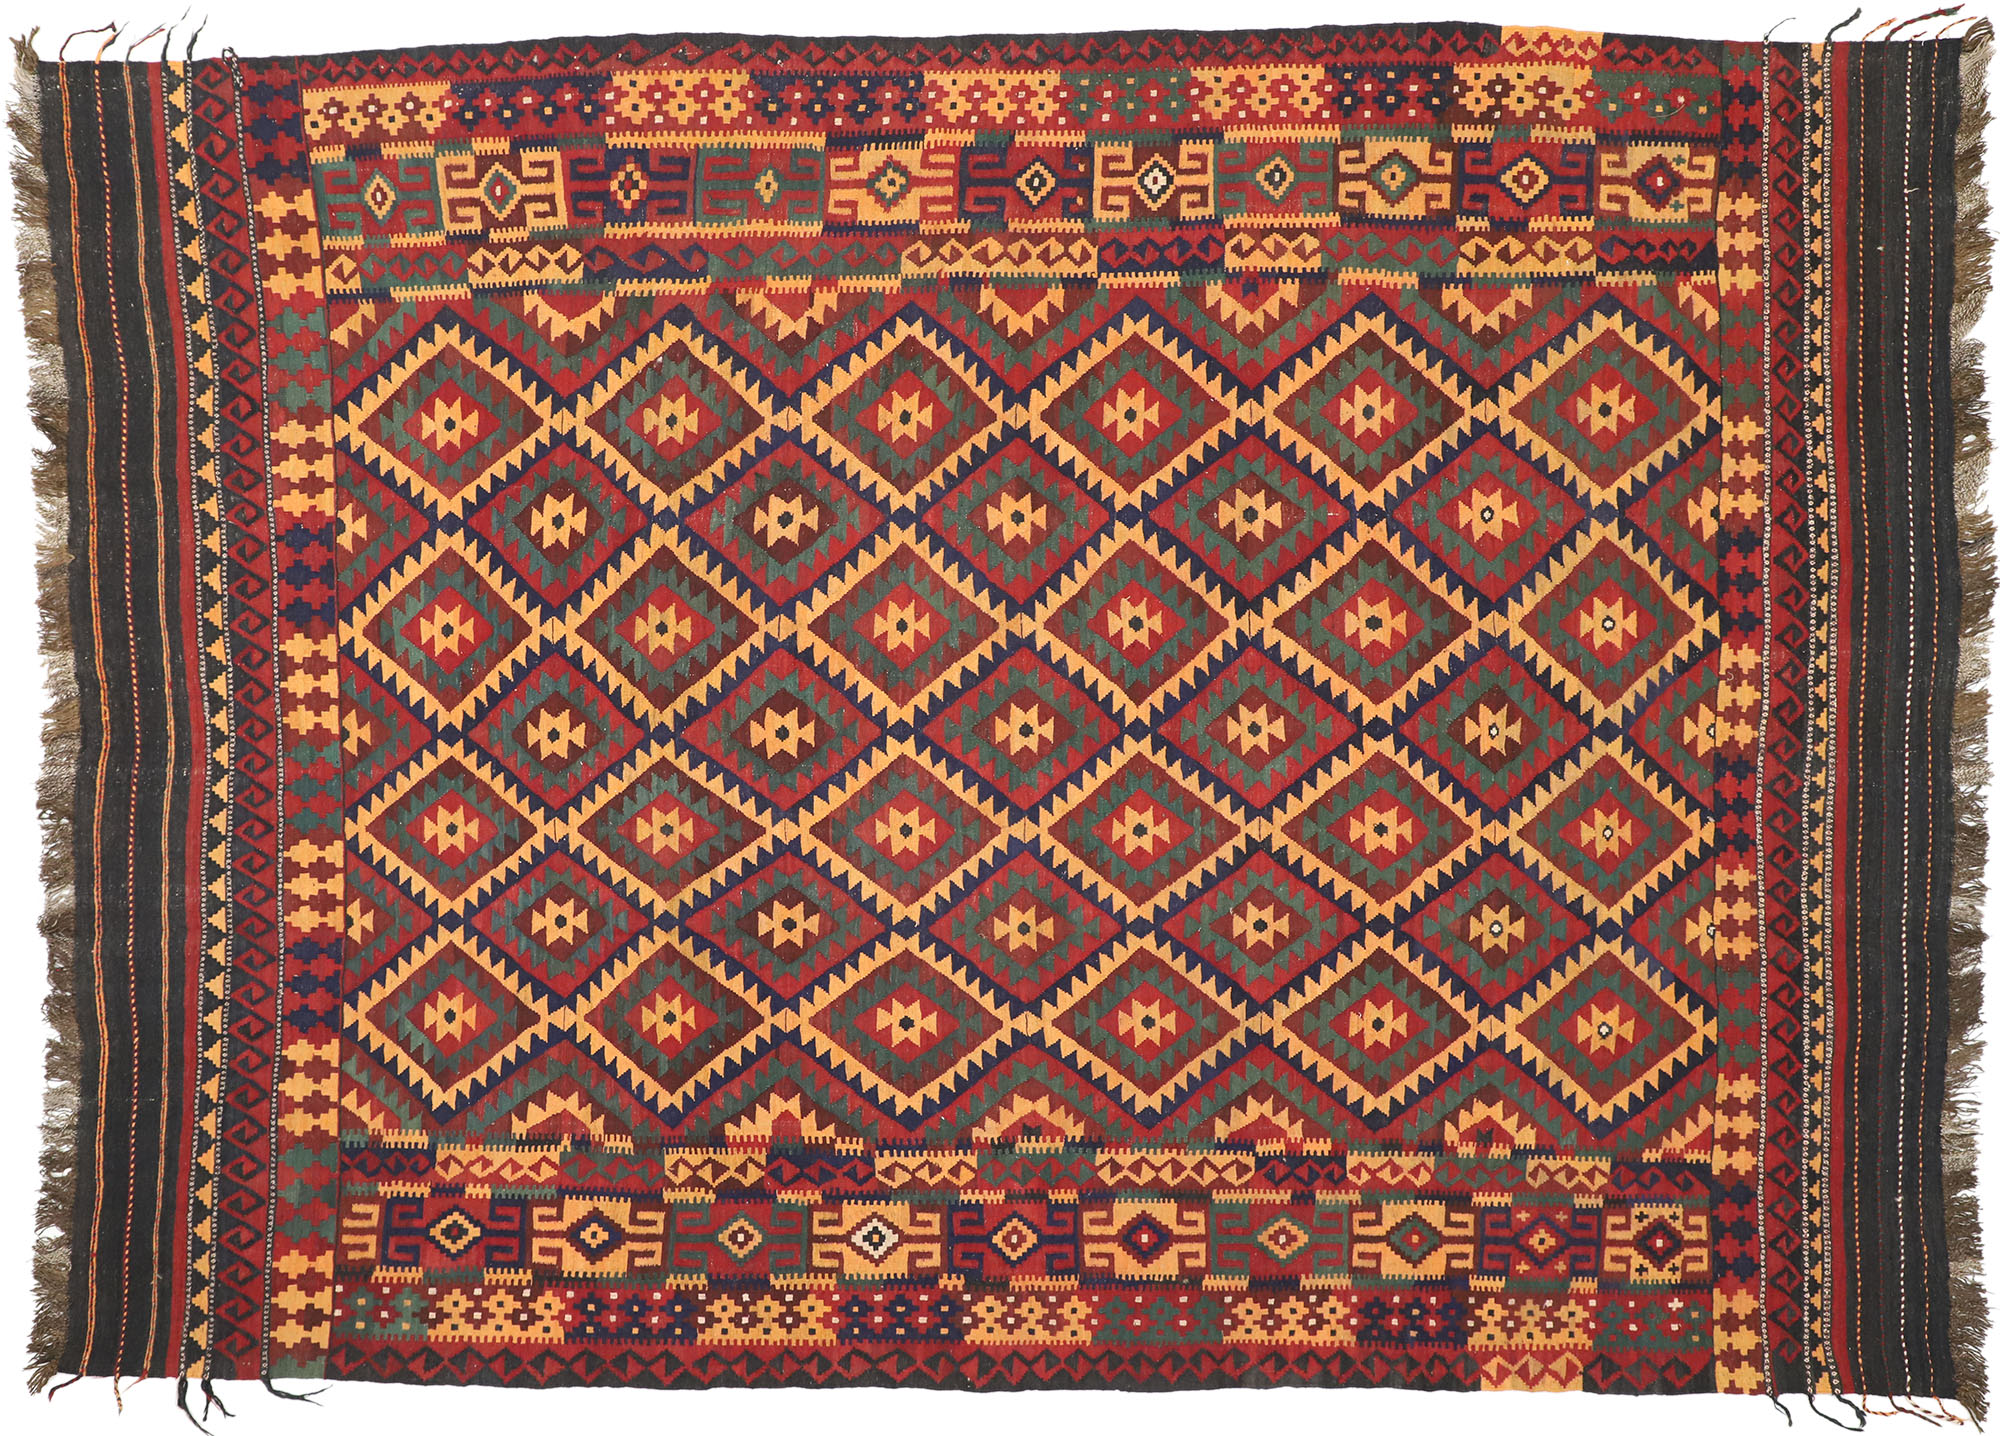 7x10 Feet Afghan Kilim Free Shipping At Lowest Price Turkish Kilim rug,Pictorial rug,Anatolian Rug,Modern Kilim,Handwoven rug 298x198 cm